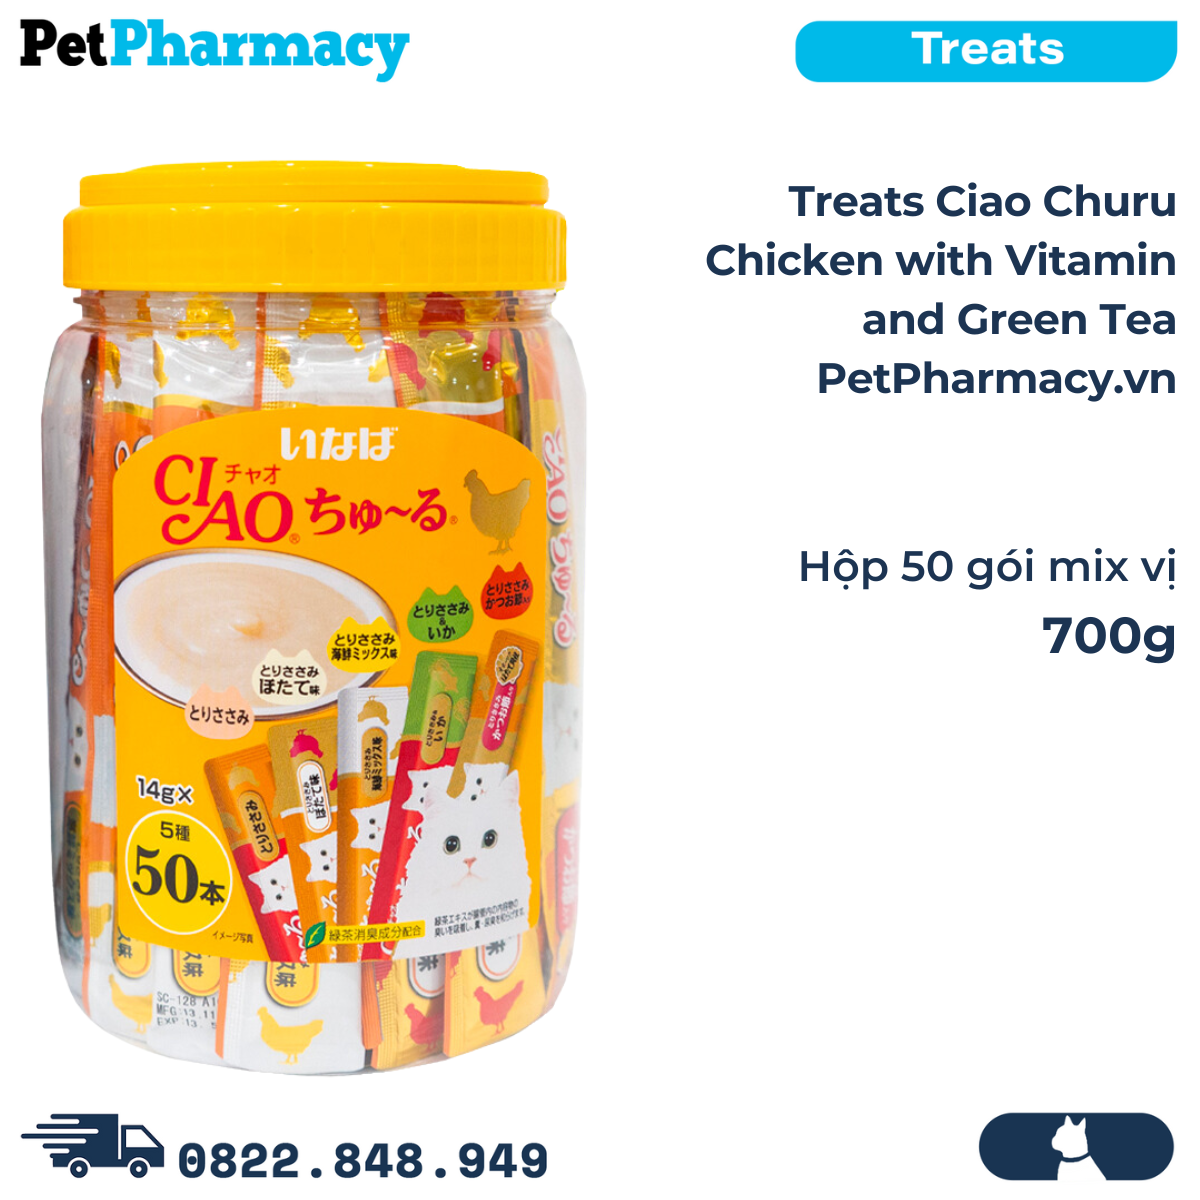  Treats Ciao Churu Chicken with Vitamin and Green Tea 700g - Hộp 50 gói mix 